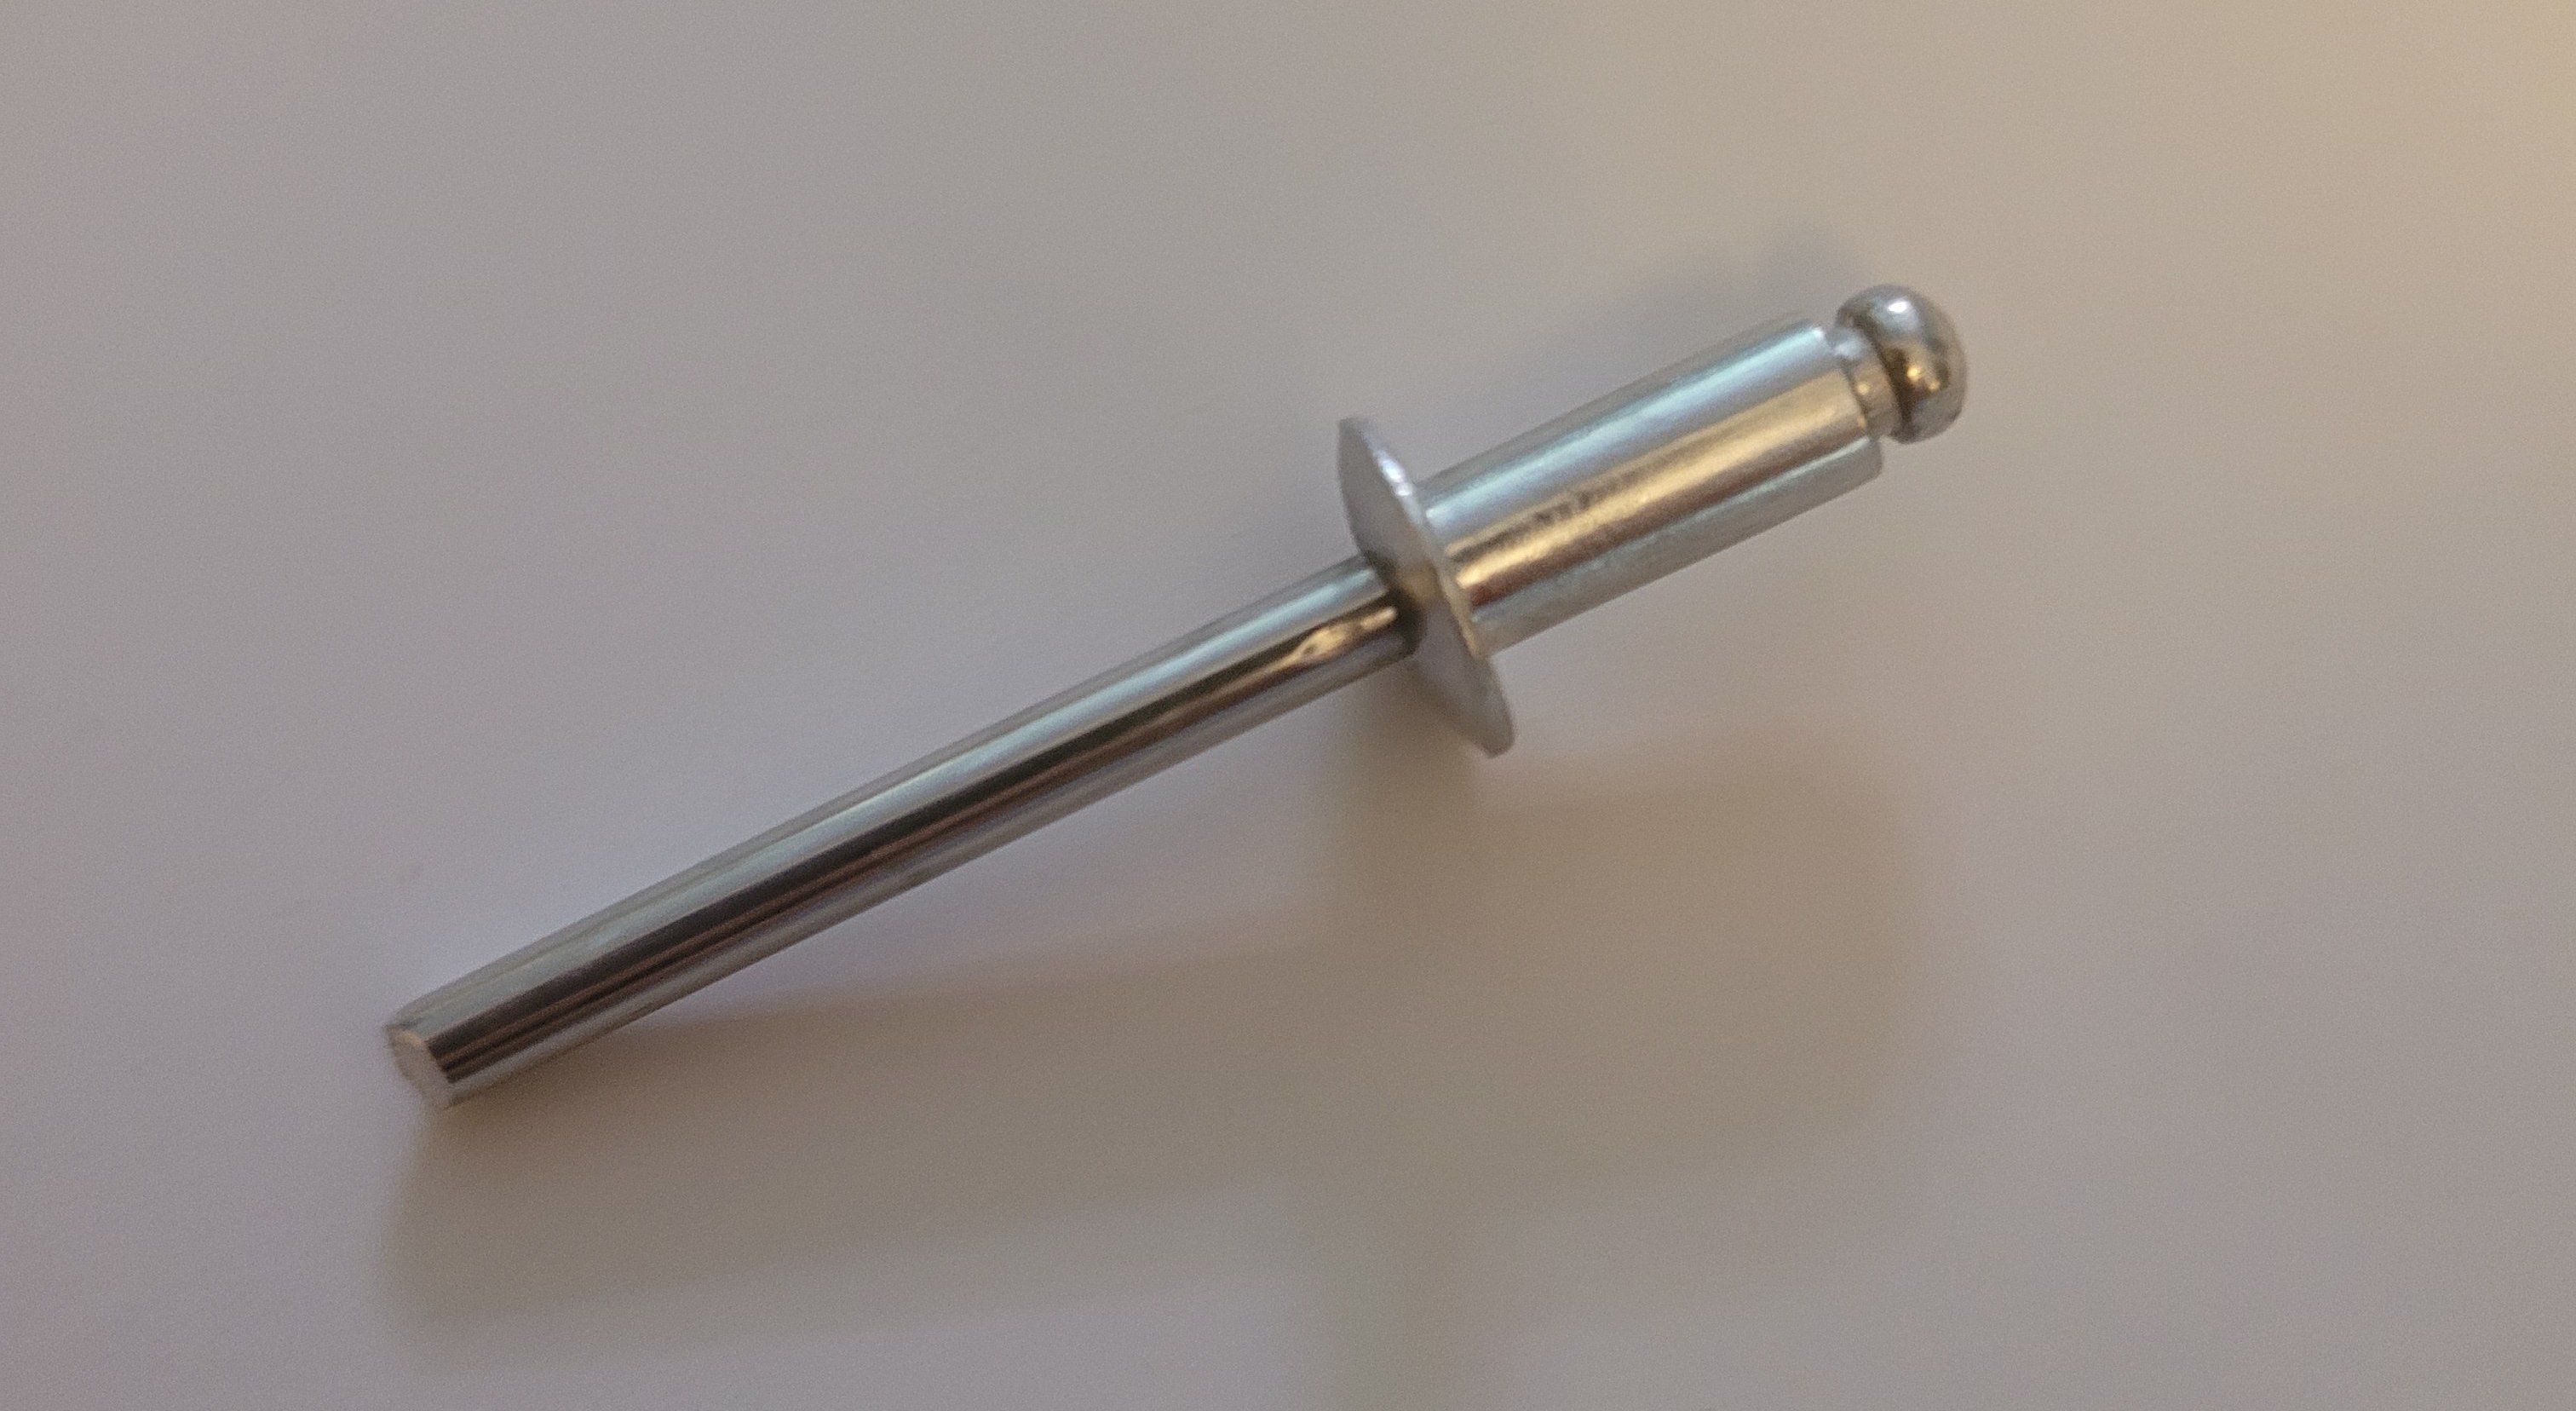 A pop rivet against a light background